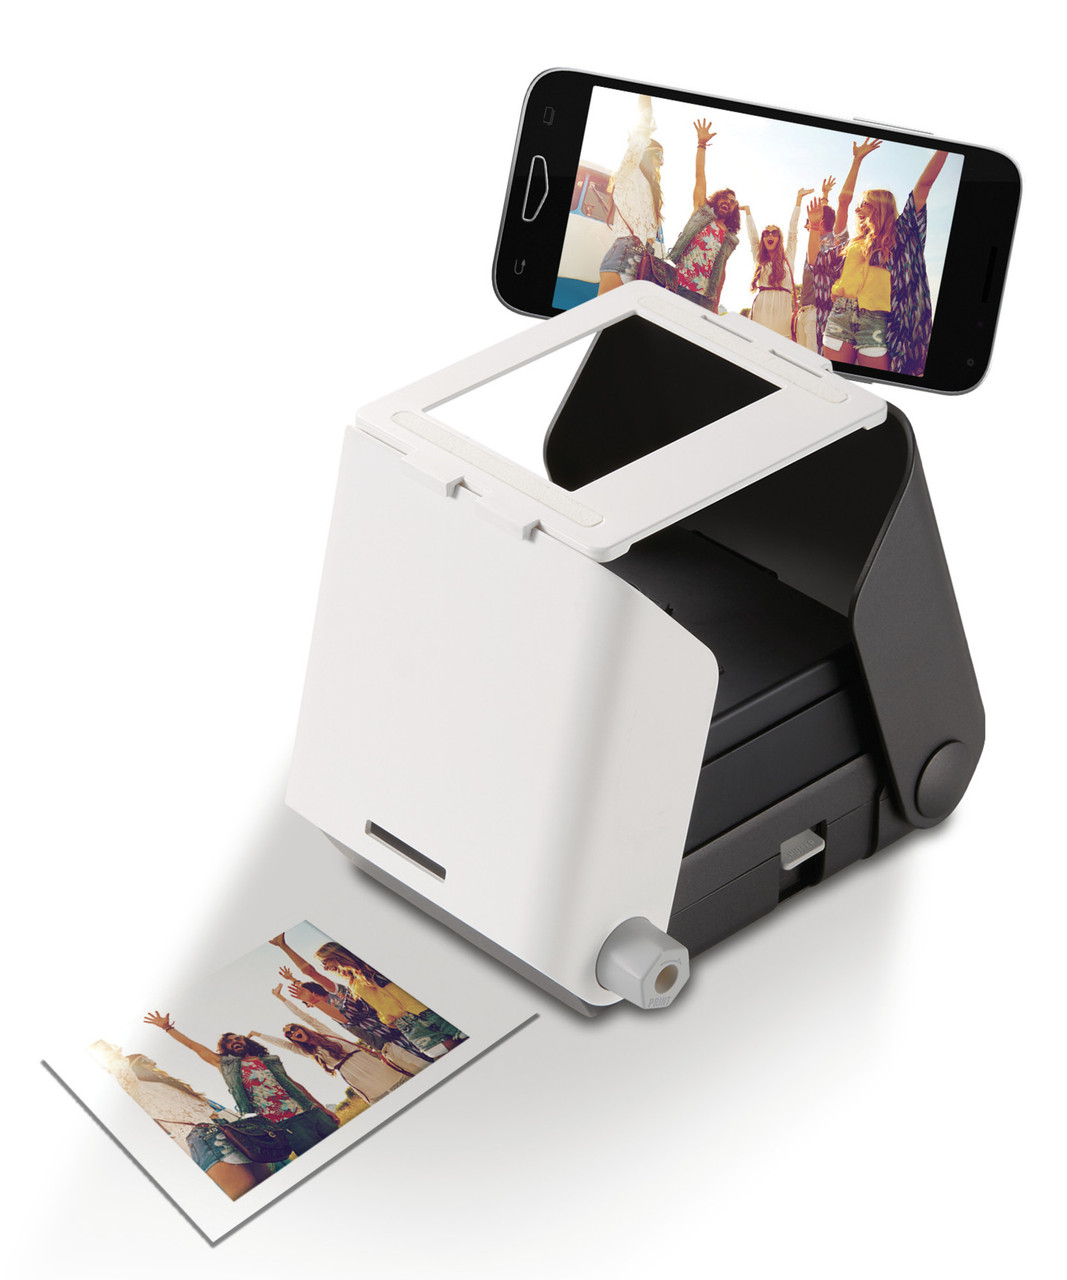 Unboxing Review de la Mi Portable Photo Printer 📸 / Impresora